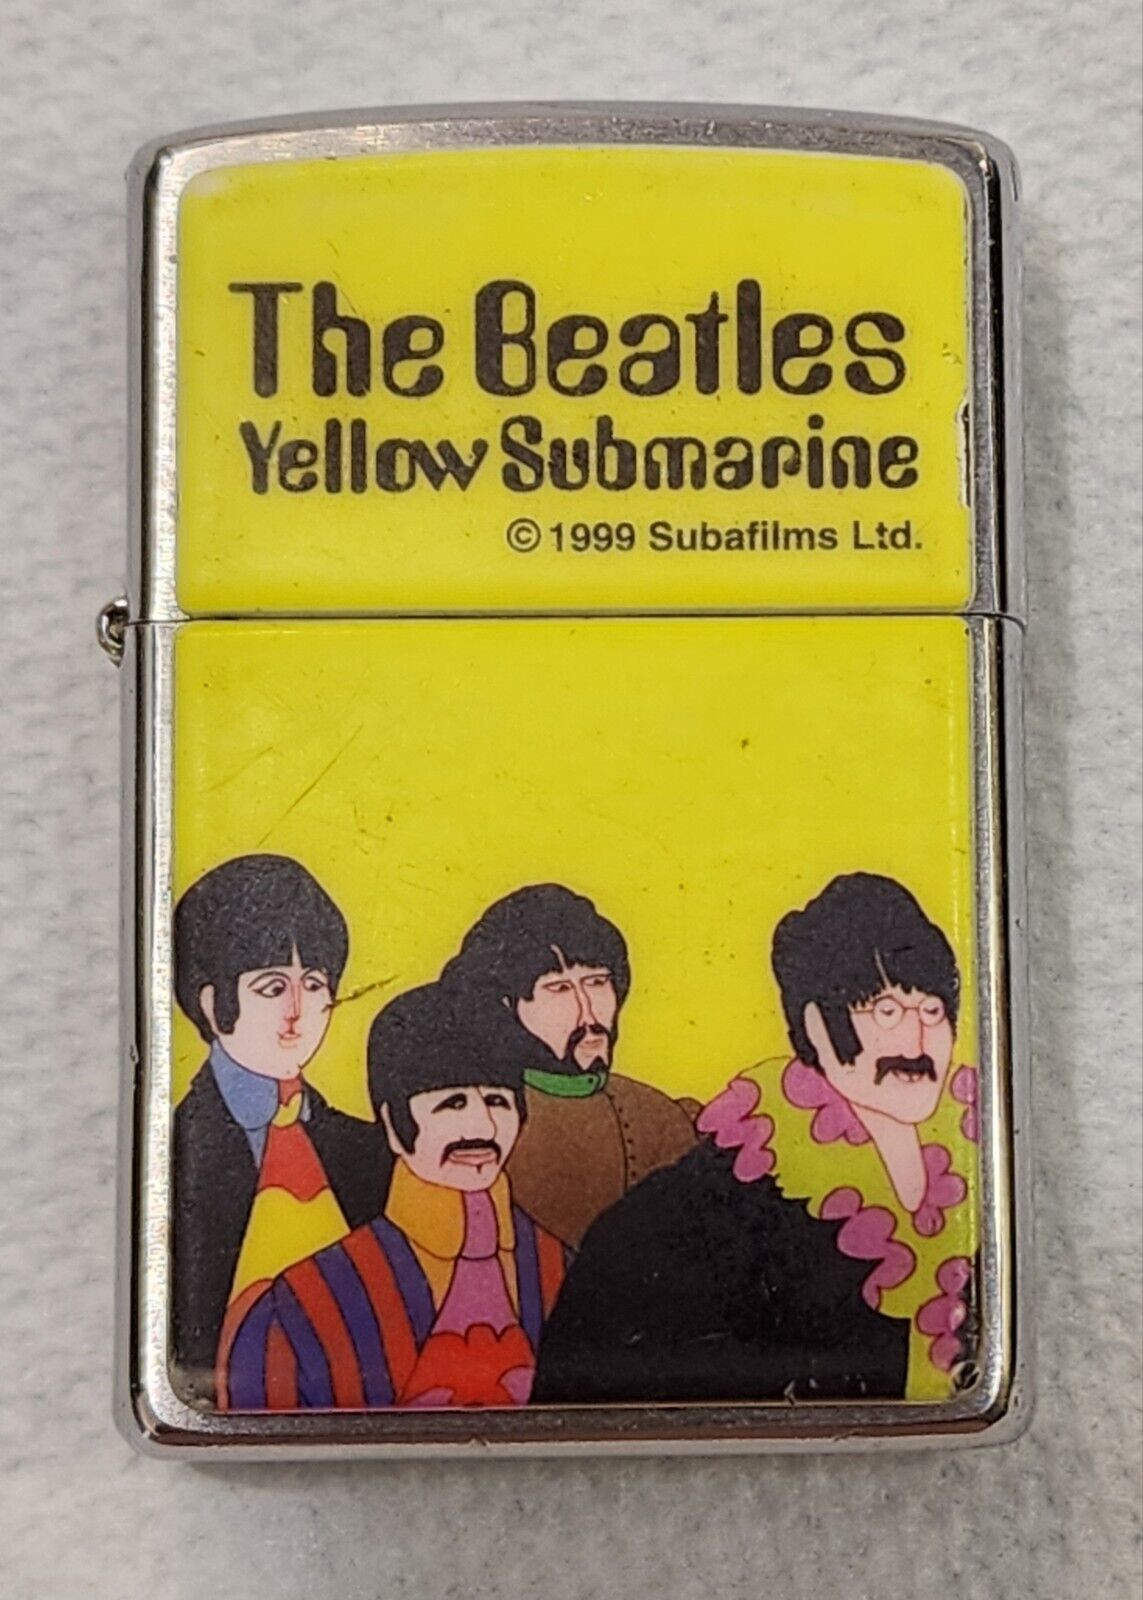 The Beatles Yellow Submarine Zippo Lighter